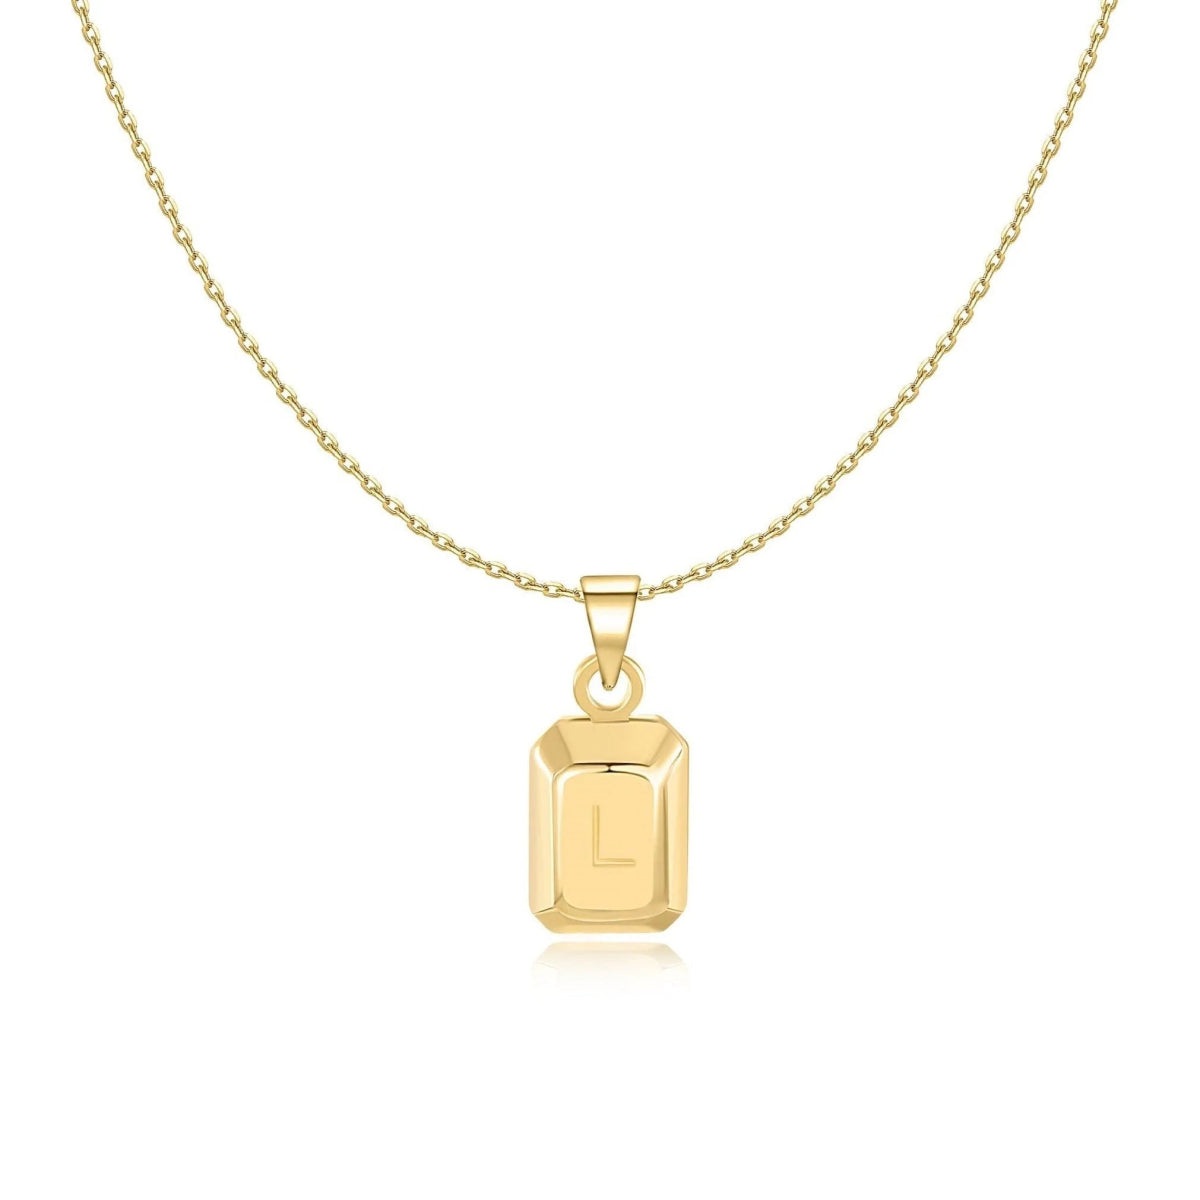 "Ingot Initials" Necklace - Milas Jewels Shop